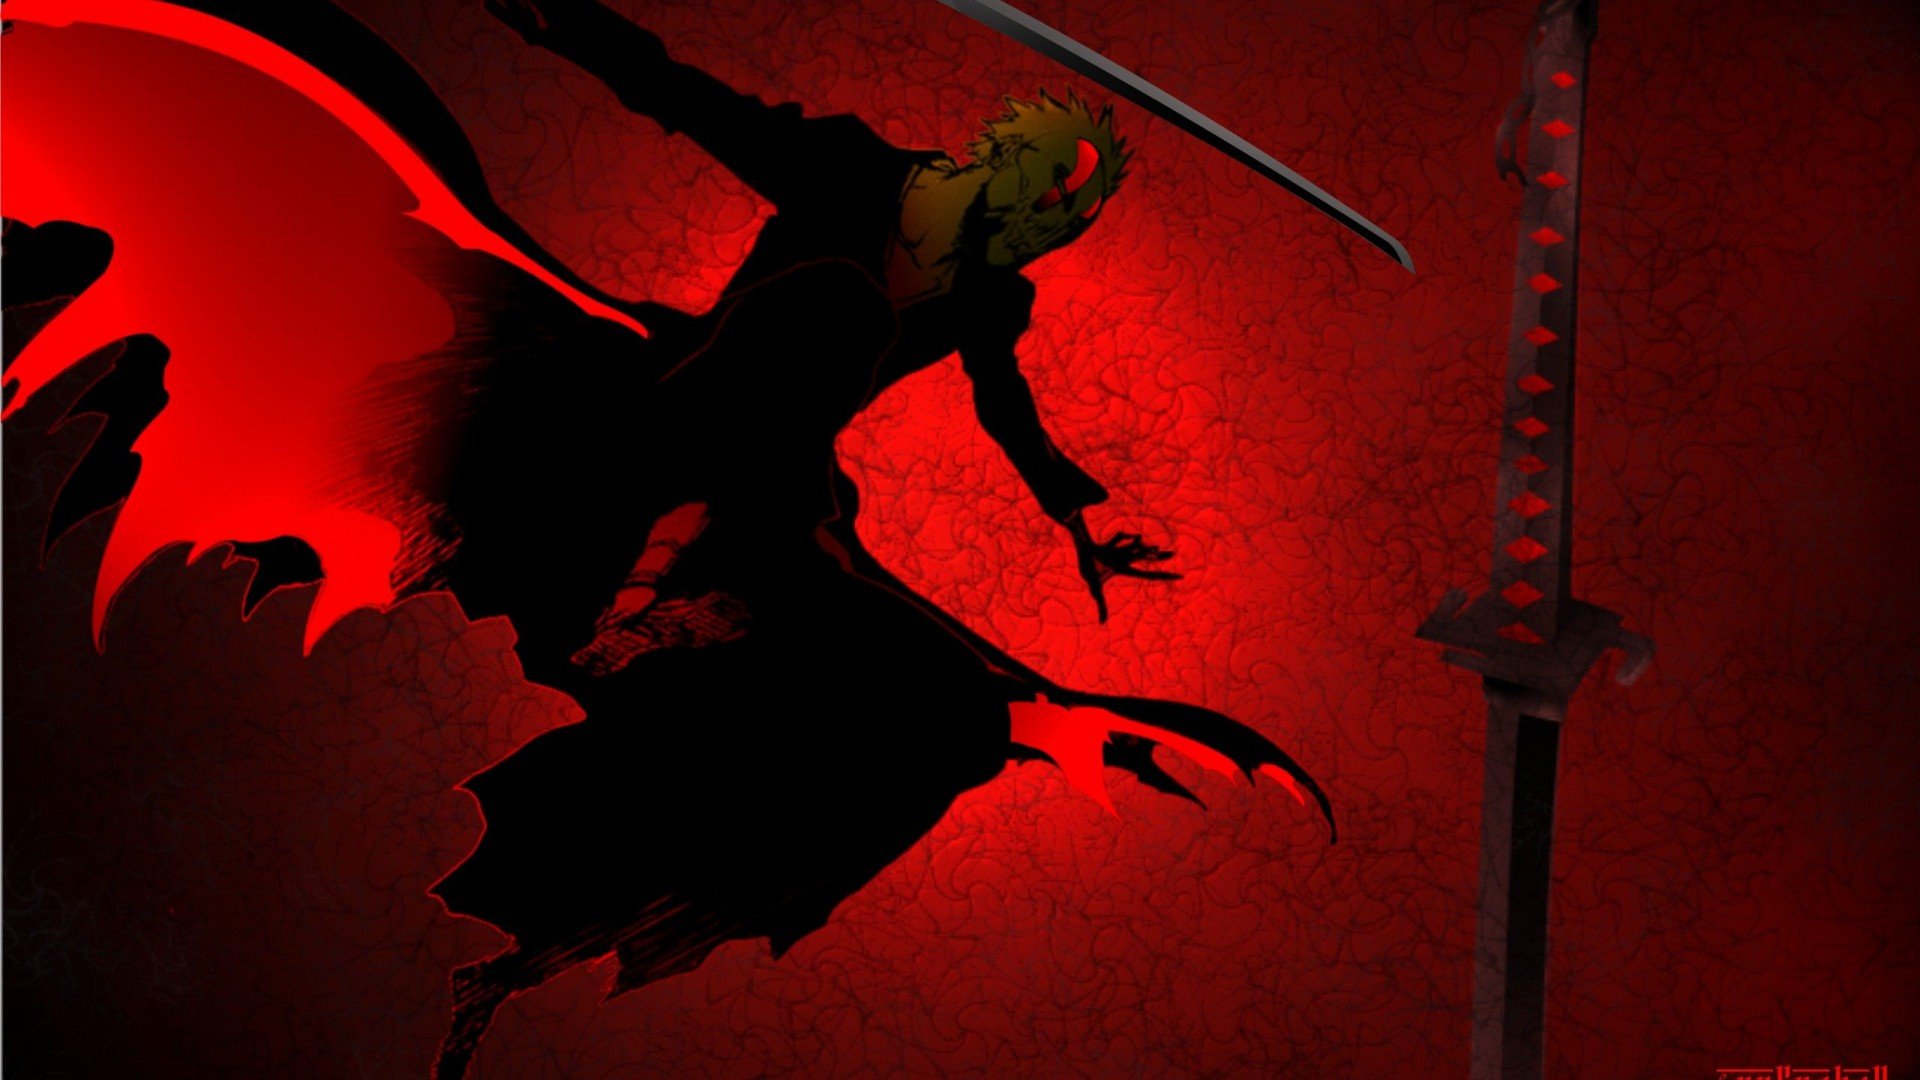 Bleach Ichigo Sword Anime Series Wallpaper